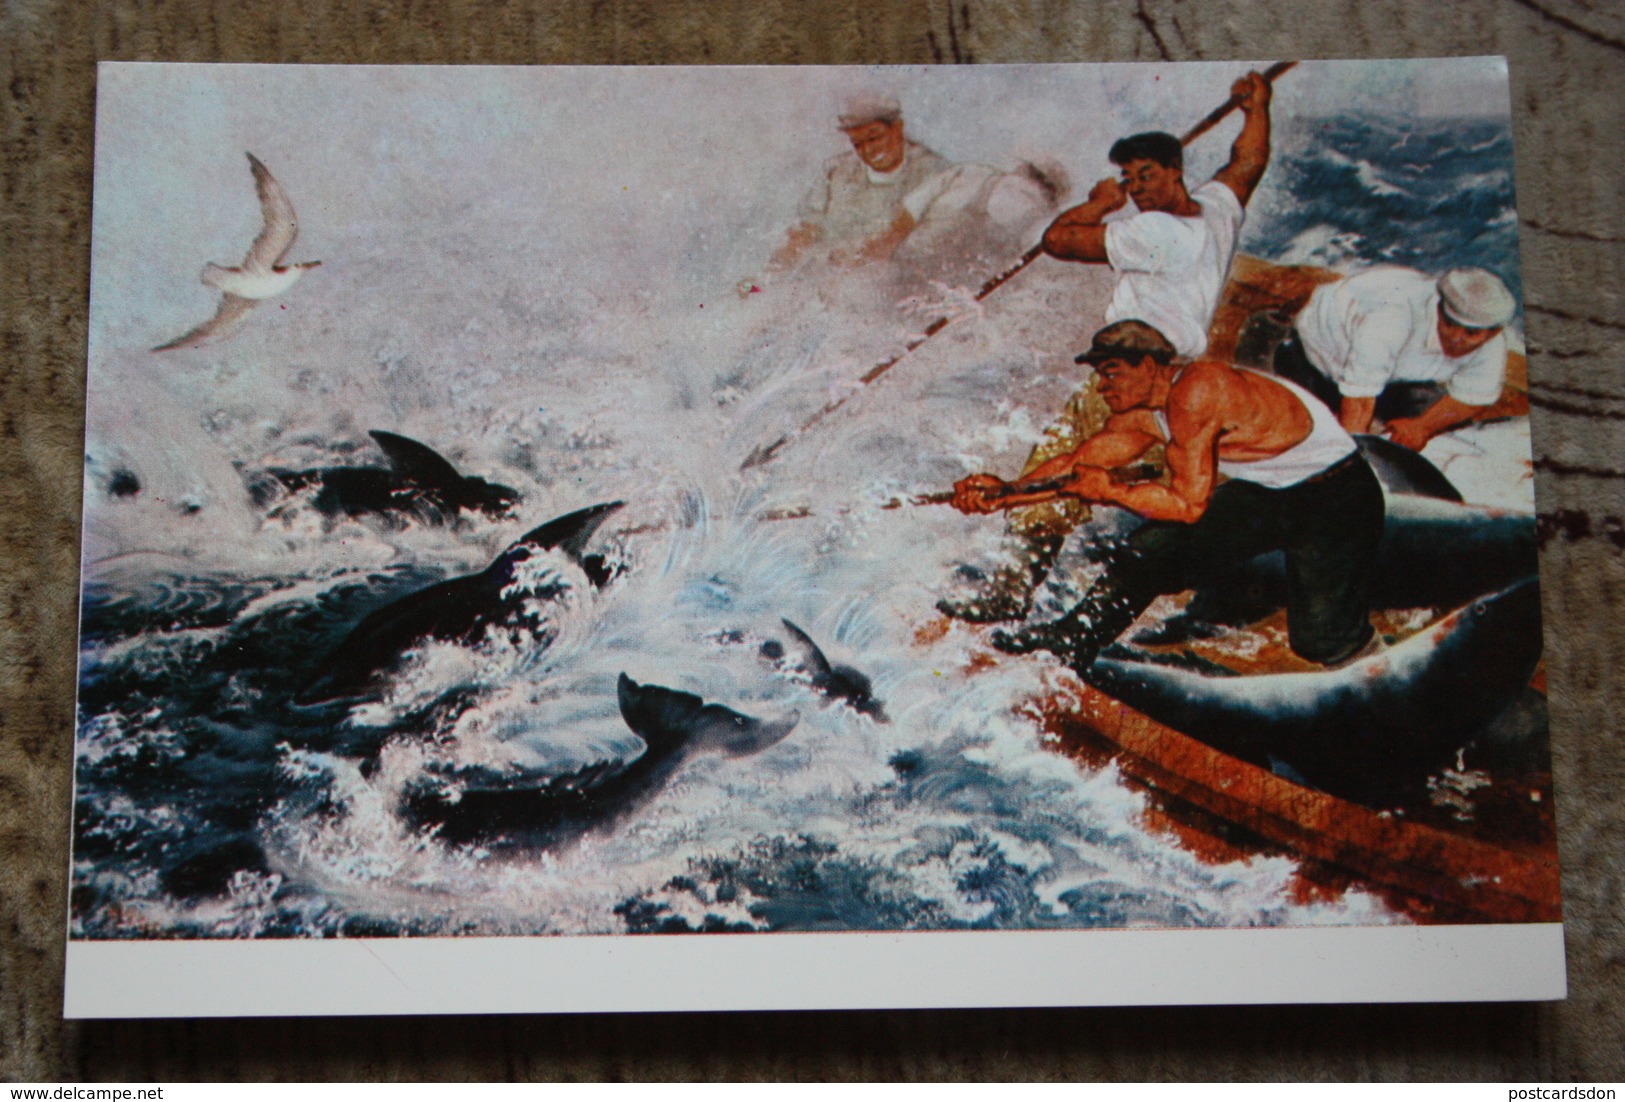 KOREA NORTH PROPAGANDA Postcard "A BIG HAUL" By Jung Jong Yu  1950s  Fishing - Corea Del Norte